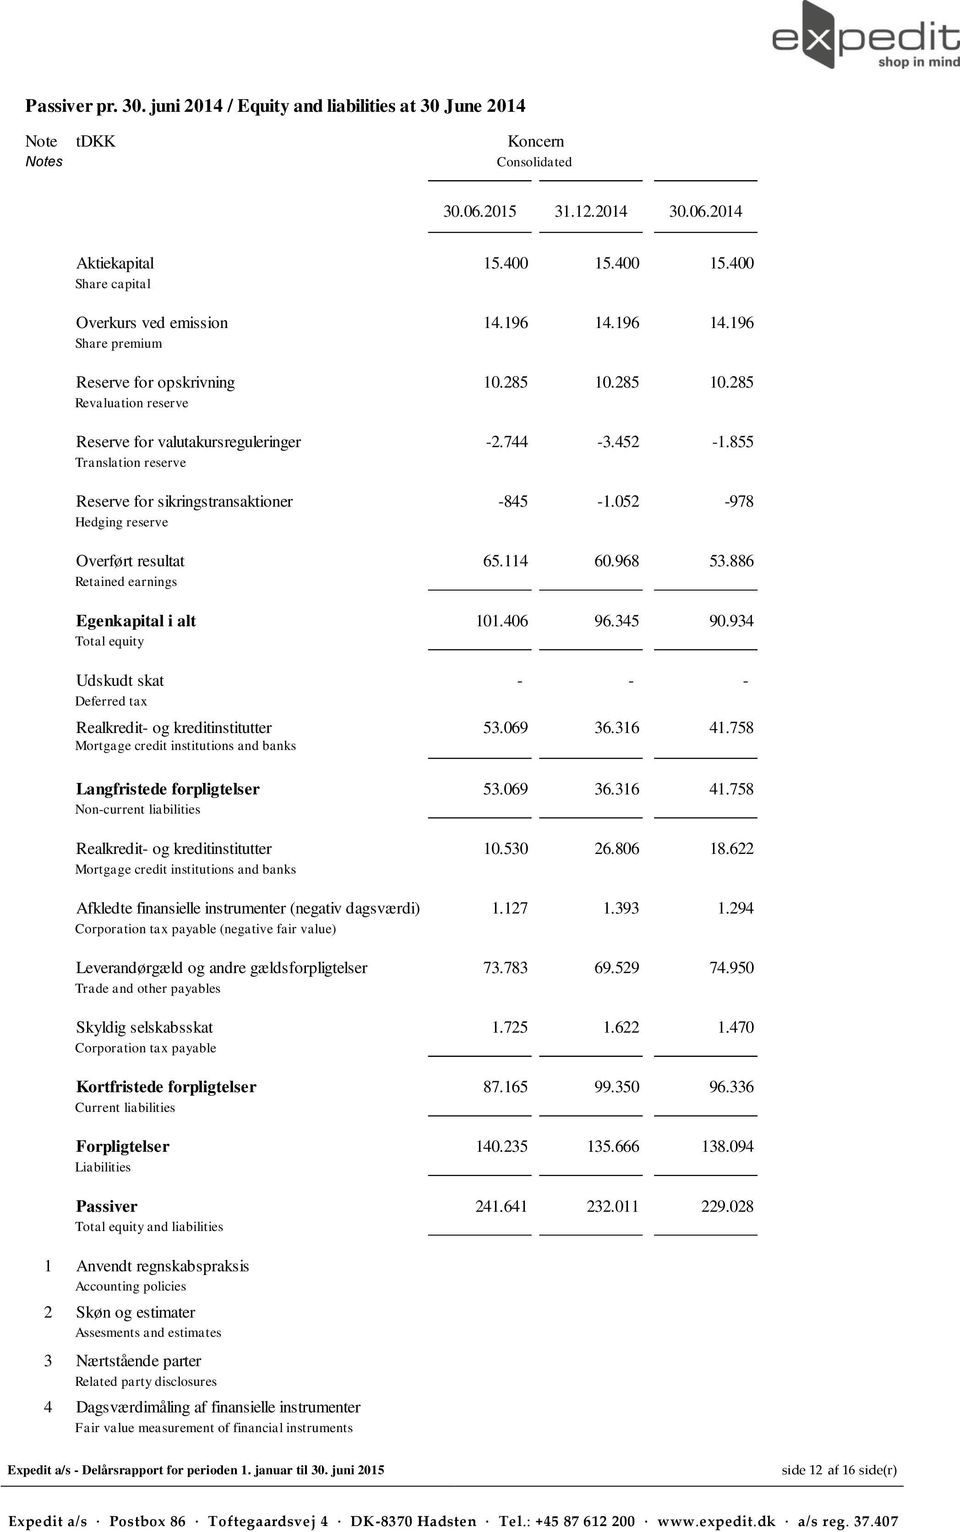 855 Translation reserve Reserve for sikringstransaktioner -845-1.052-978 Hedging reserve Overført resultat 65.114 60.968 53.886 Retained earnings Egenkapital i alt 101.406 96.345 90.